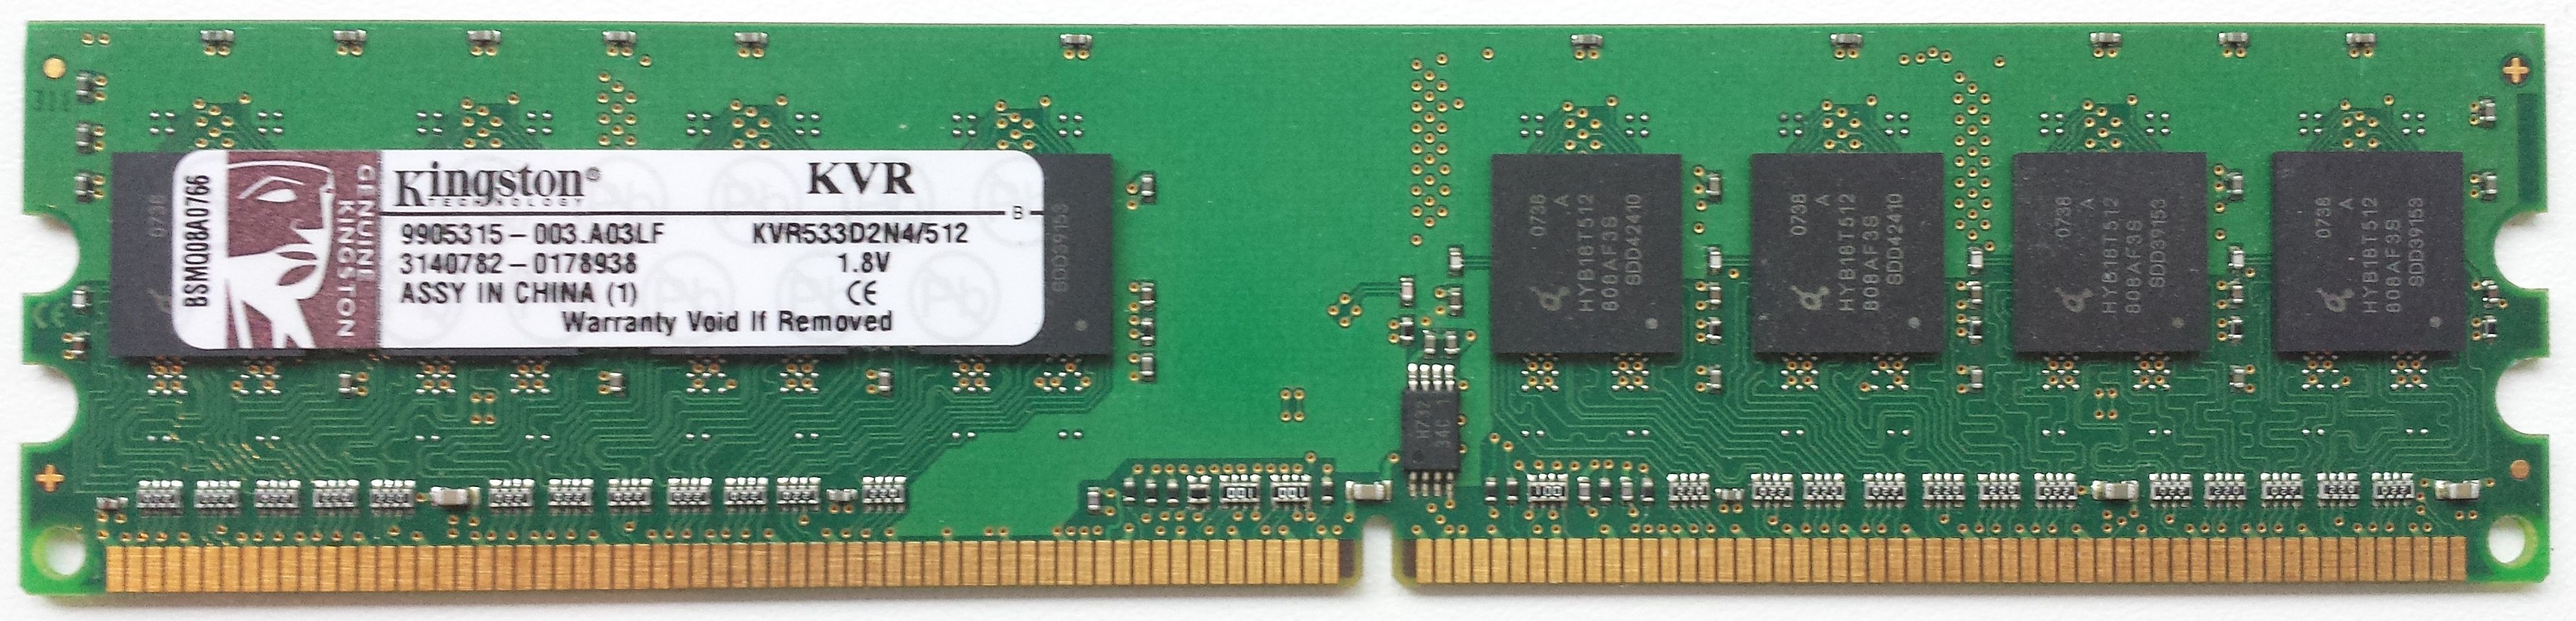 DDR2 512MB 533Mhz-PC4200 / Kingston KVR533D2N4/512